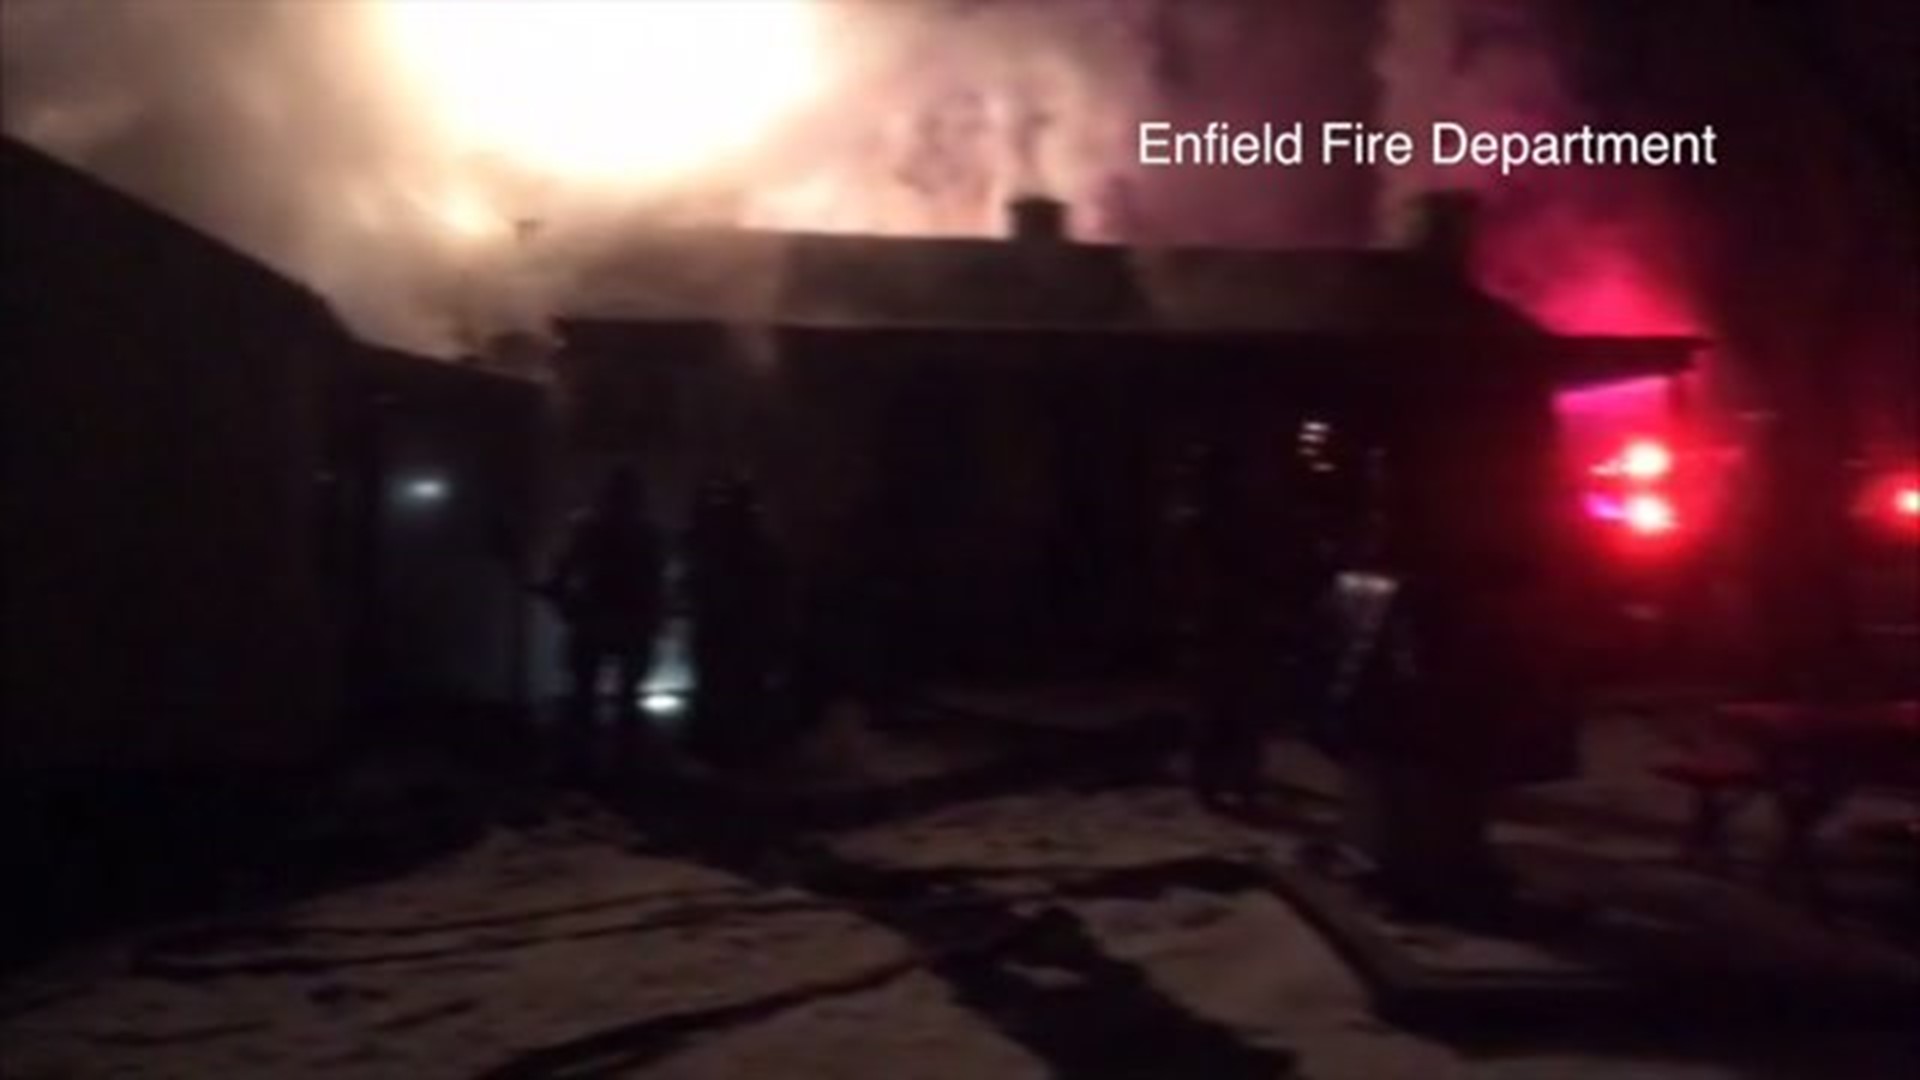 Firefighter cam: Crews battle blaze in Enfield home